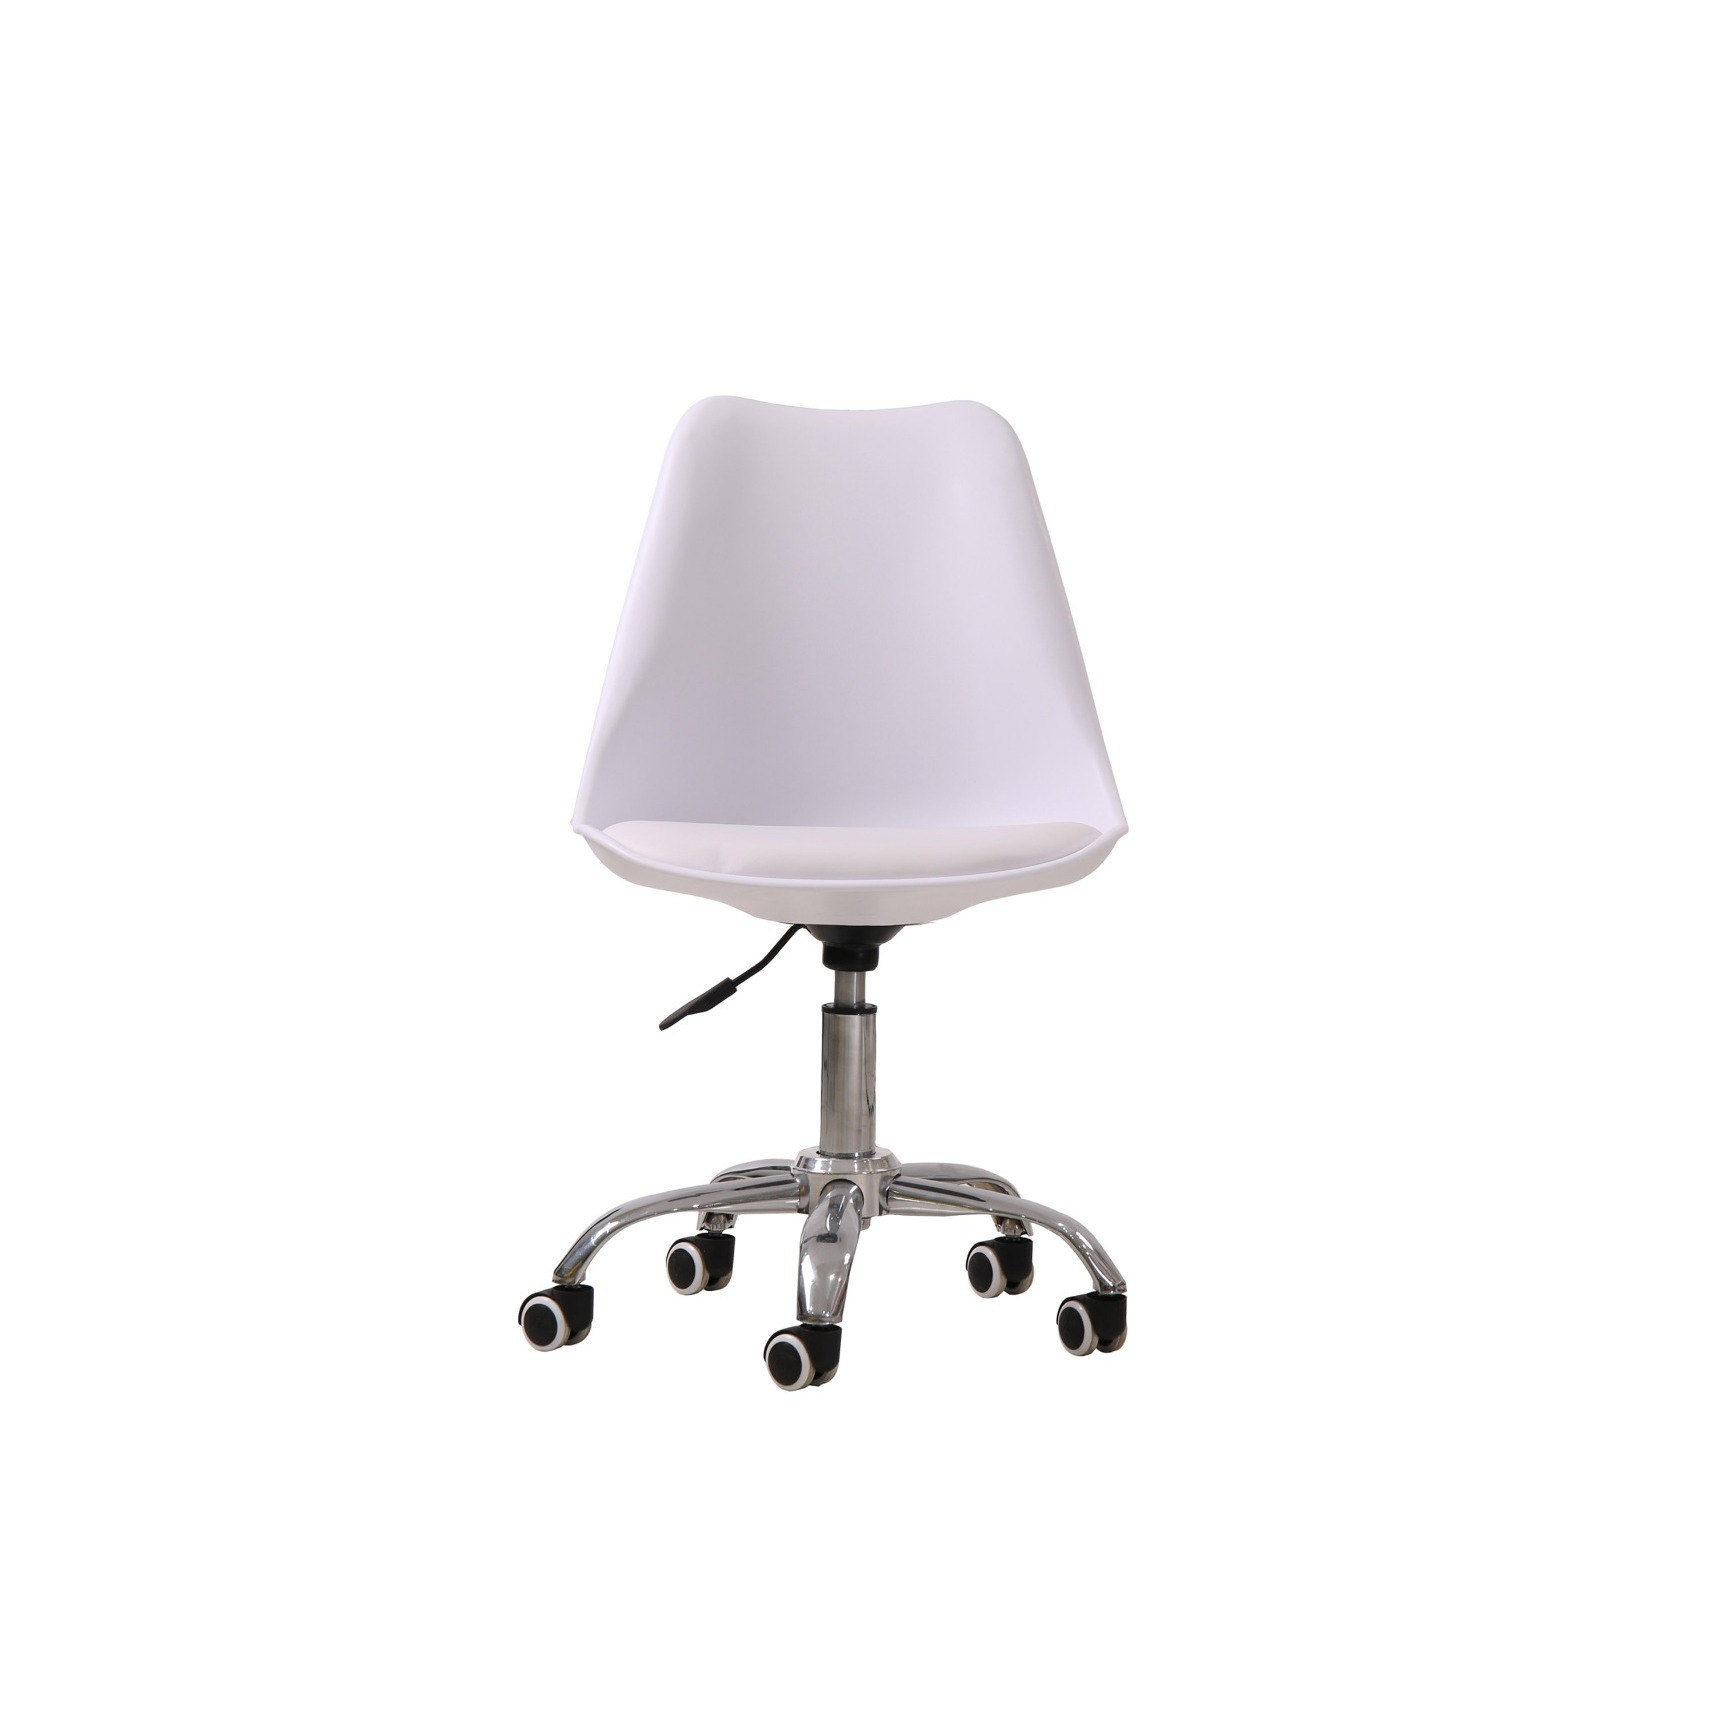 LPD Orsen Swivel Office Chair White - image 1